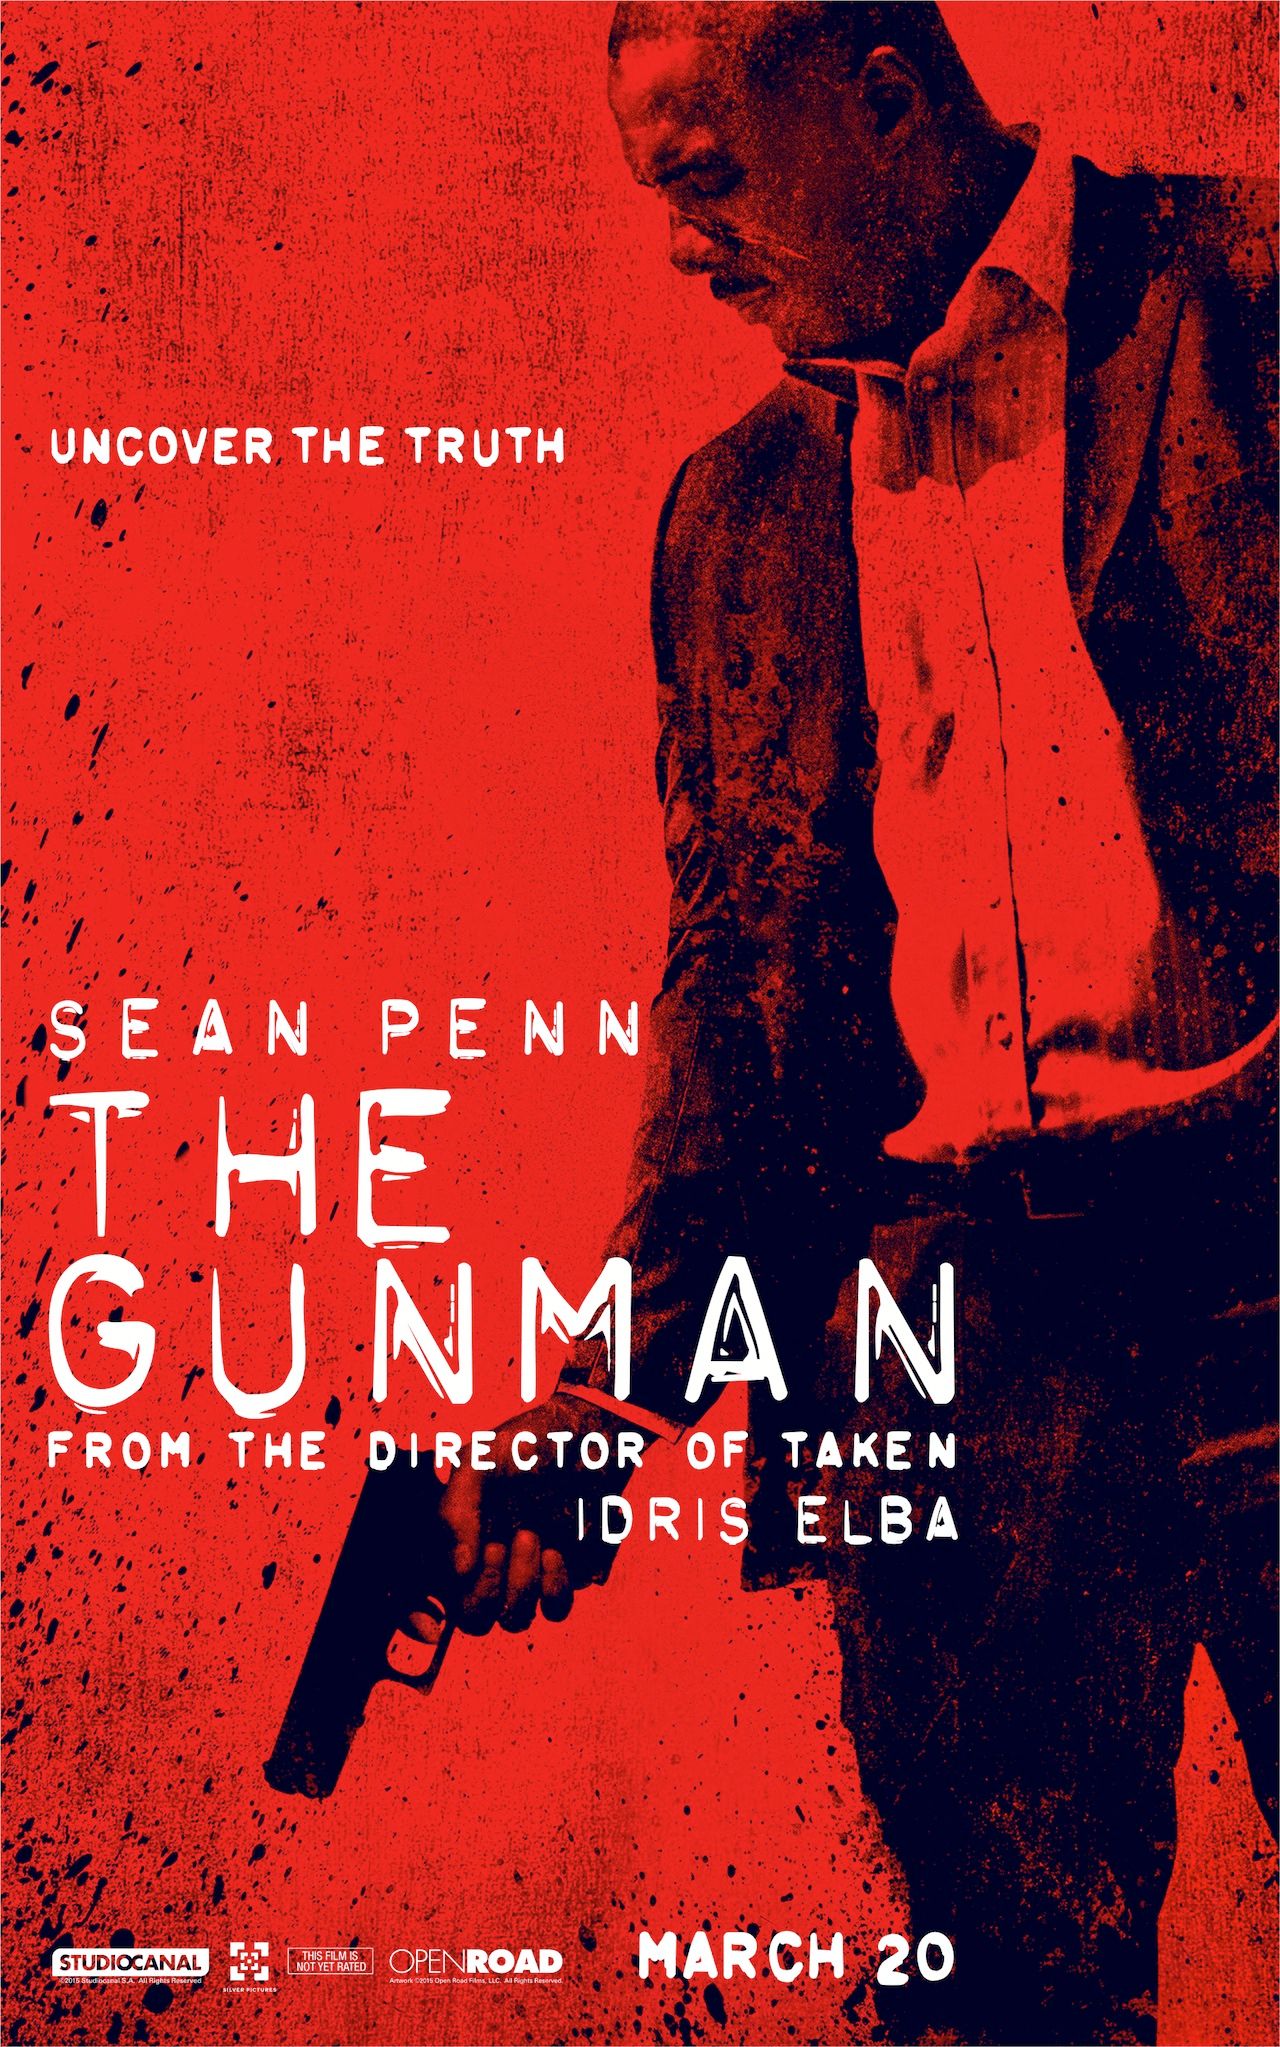 The Gunman Poster - Idris Elba